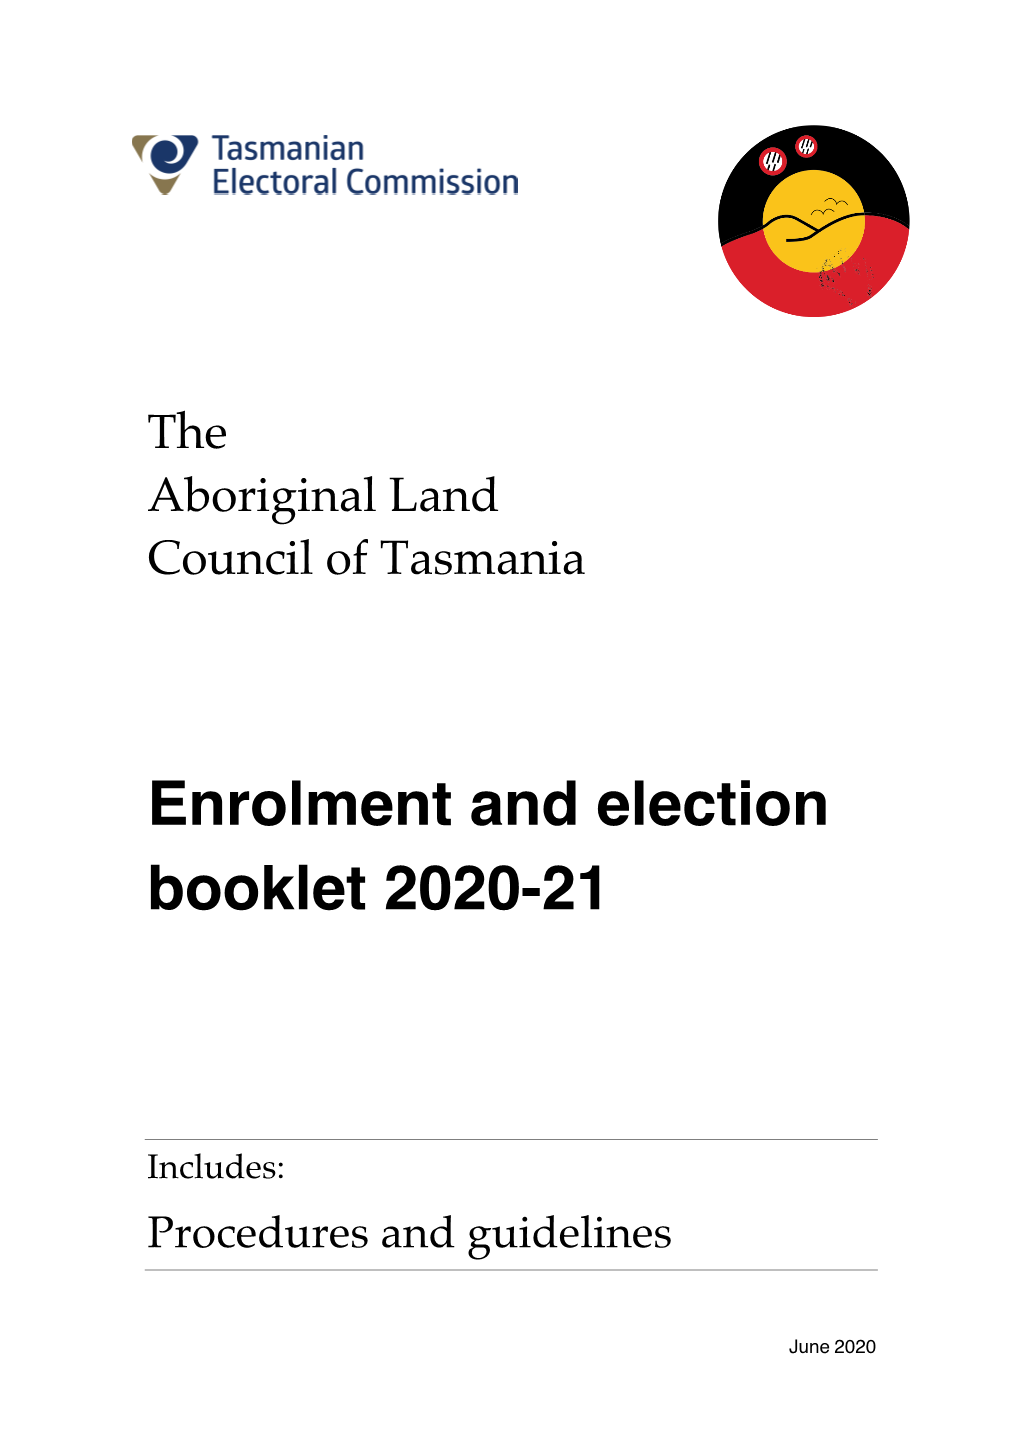 Enrolment and Election Booklet 2020-21